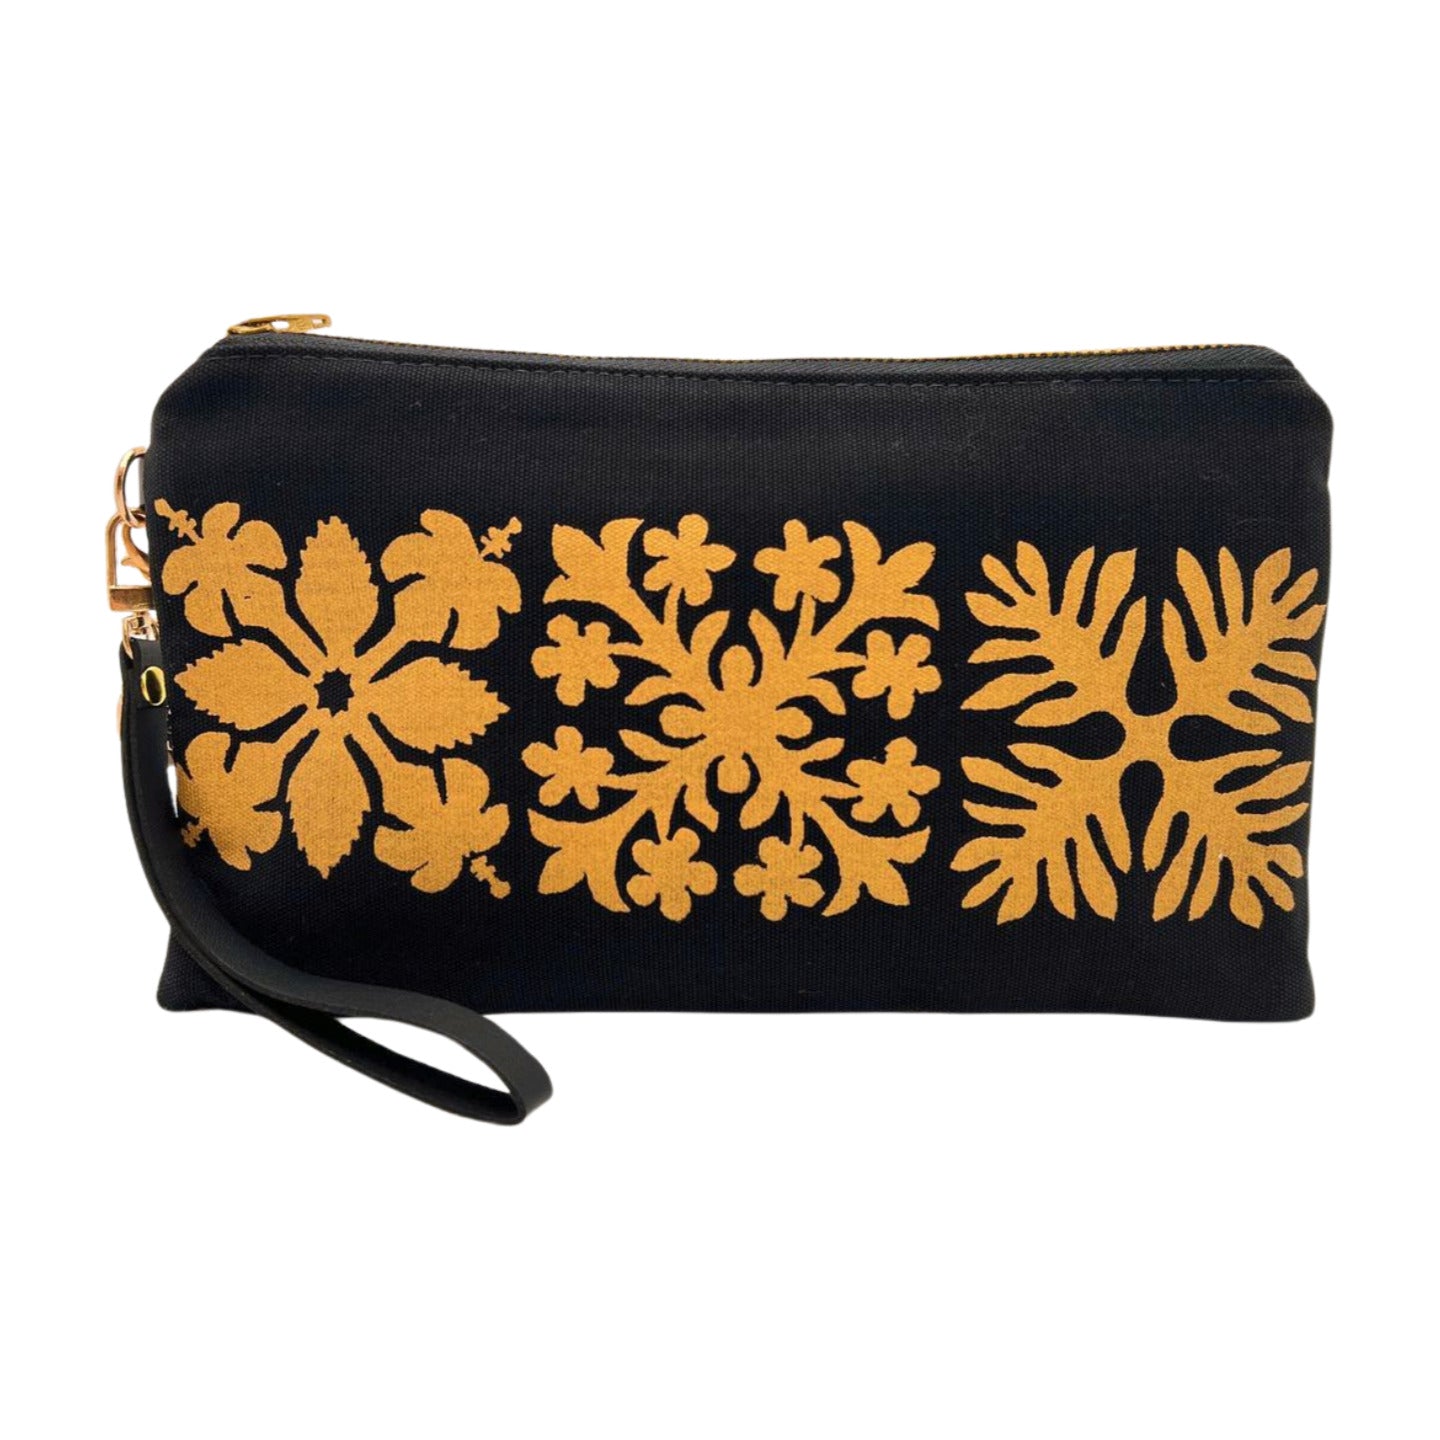 Pop-Up Mākeke - A Maui Day Original Handbags - Handprinted Small Handbag - Gold Quilt on Black Canvas - Front View